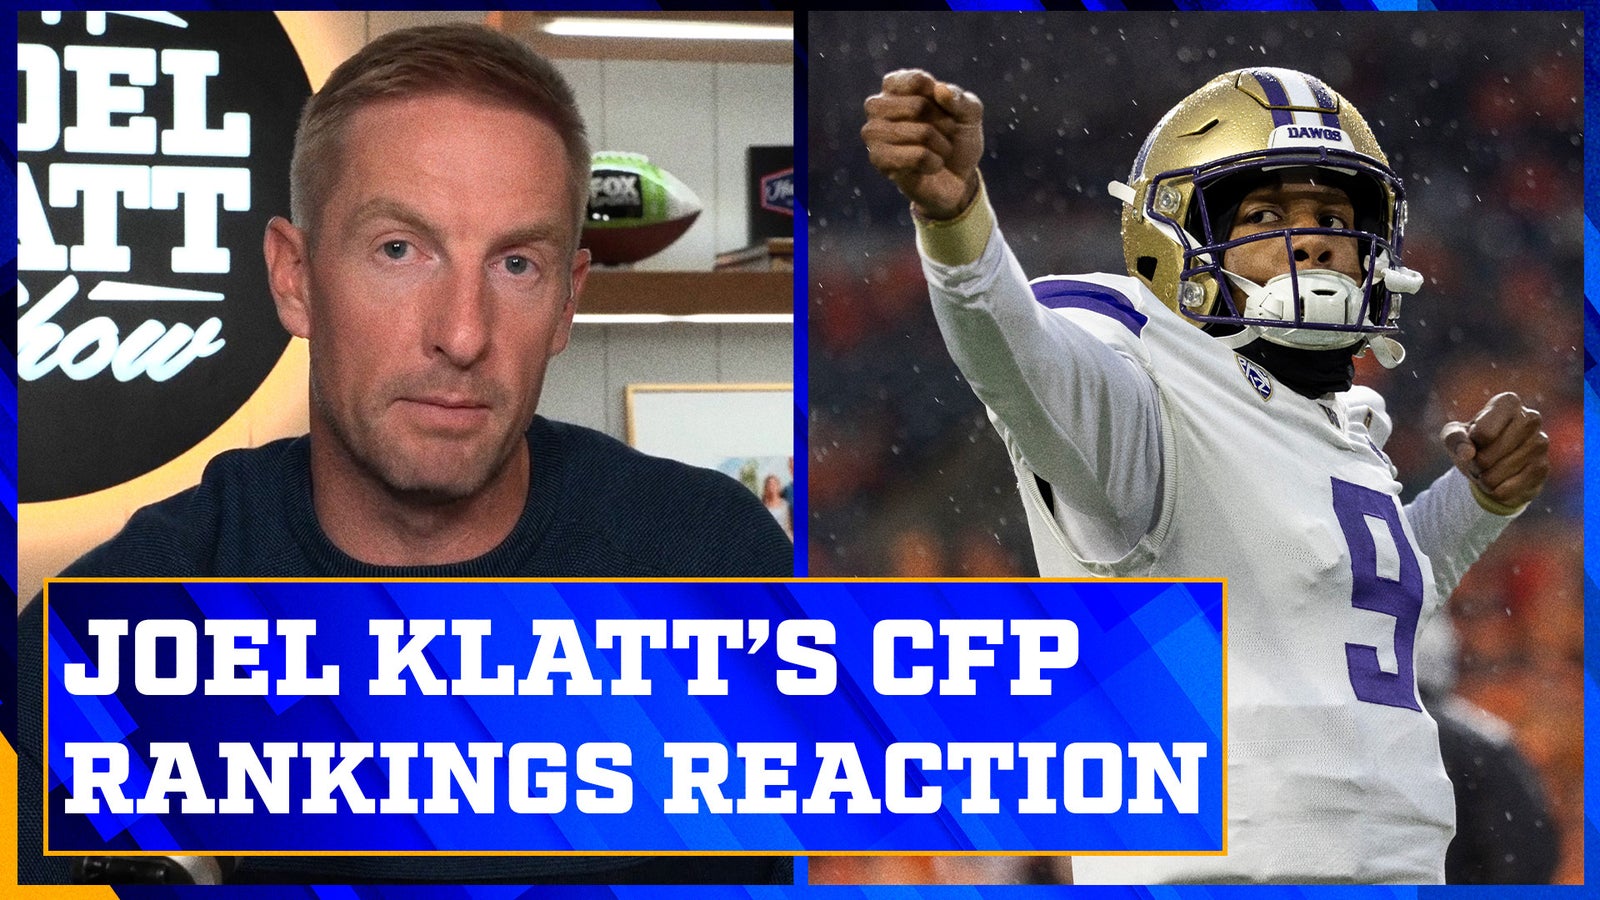 Washington jumps Florida State in the Week 13 CFP rankings – Joel Klatt reacts